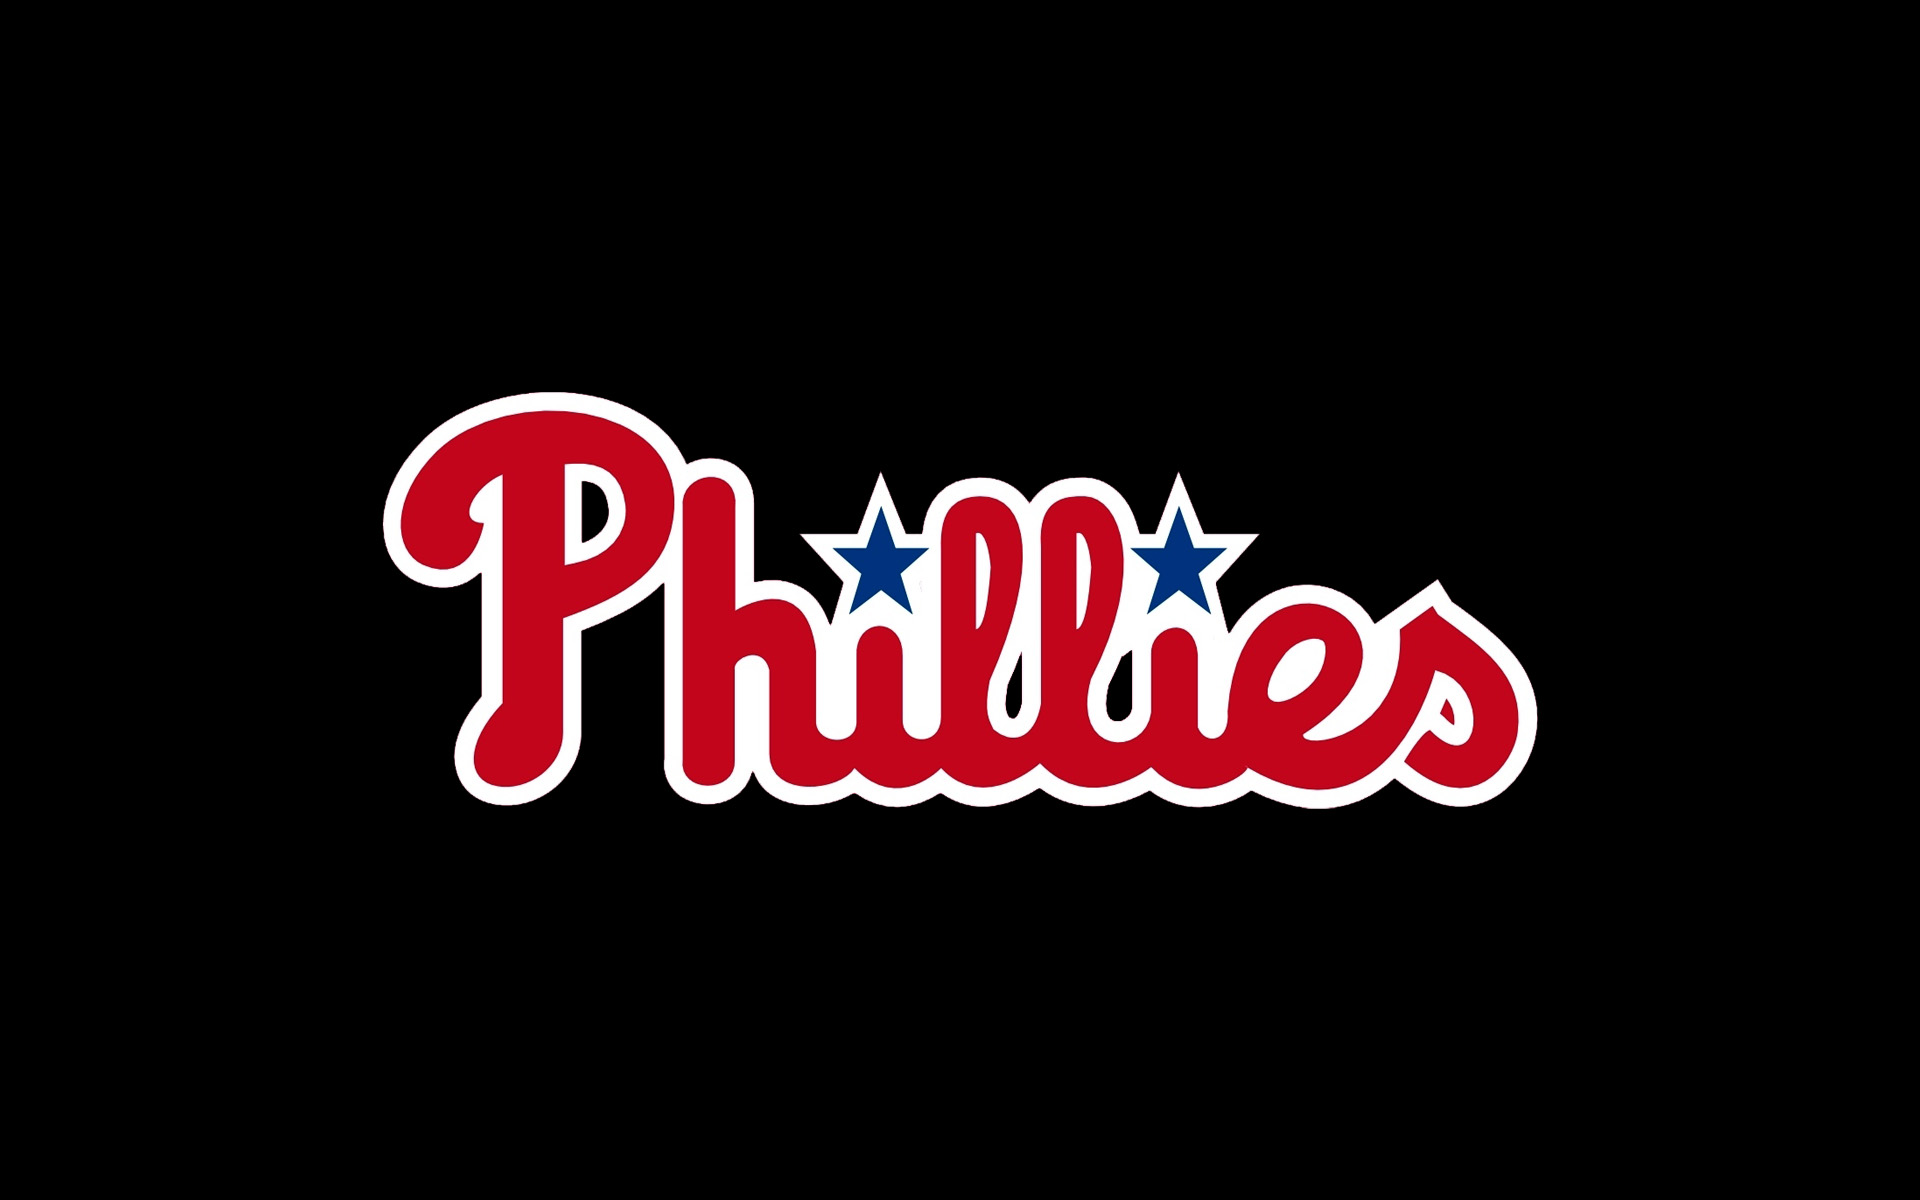 Phillies Logo Wallpaper images